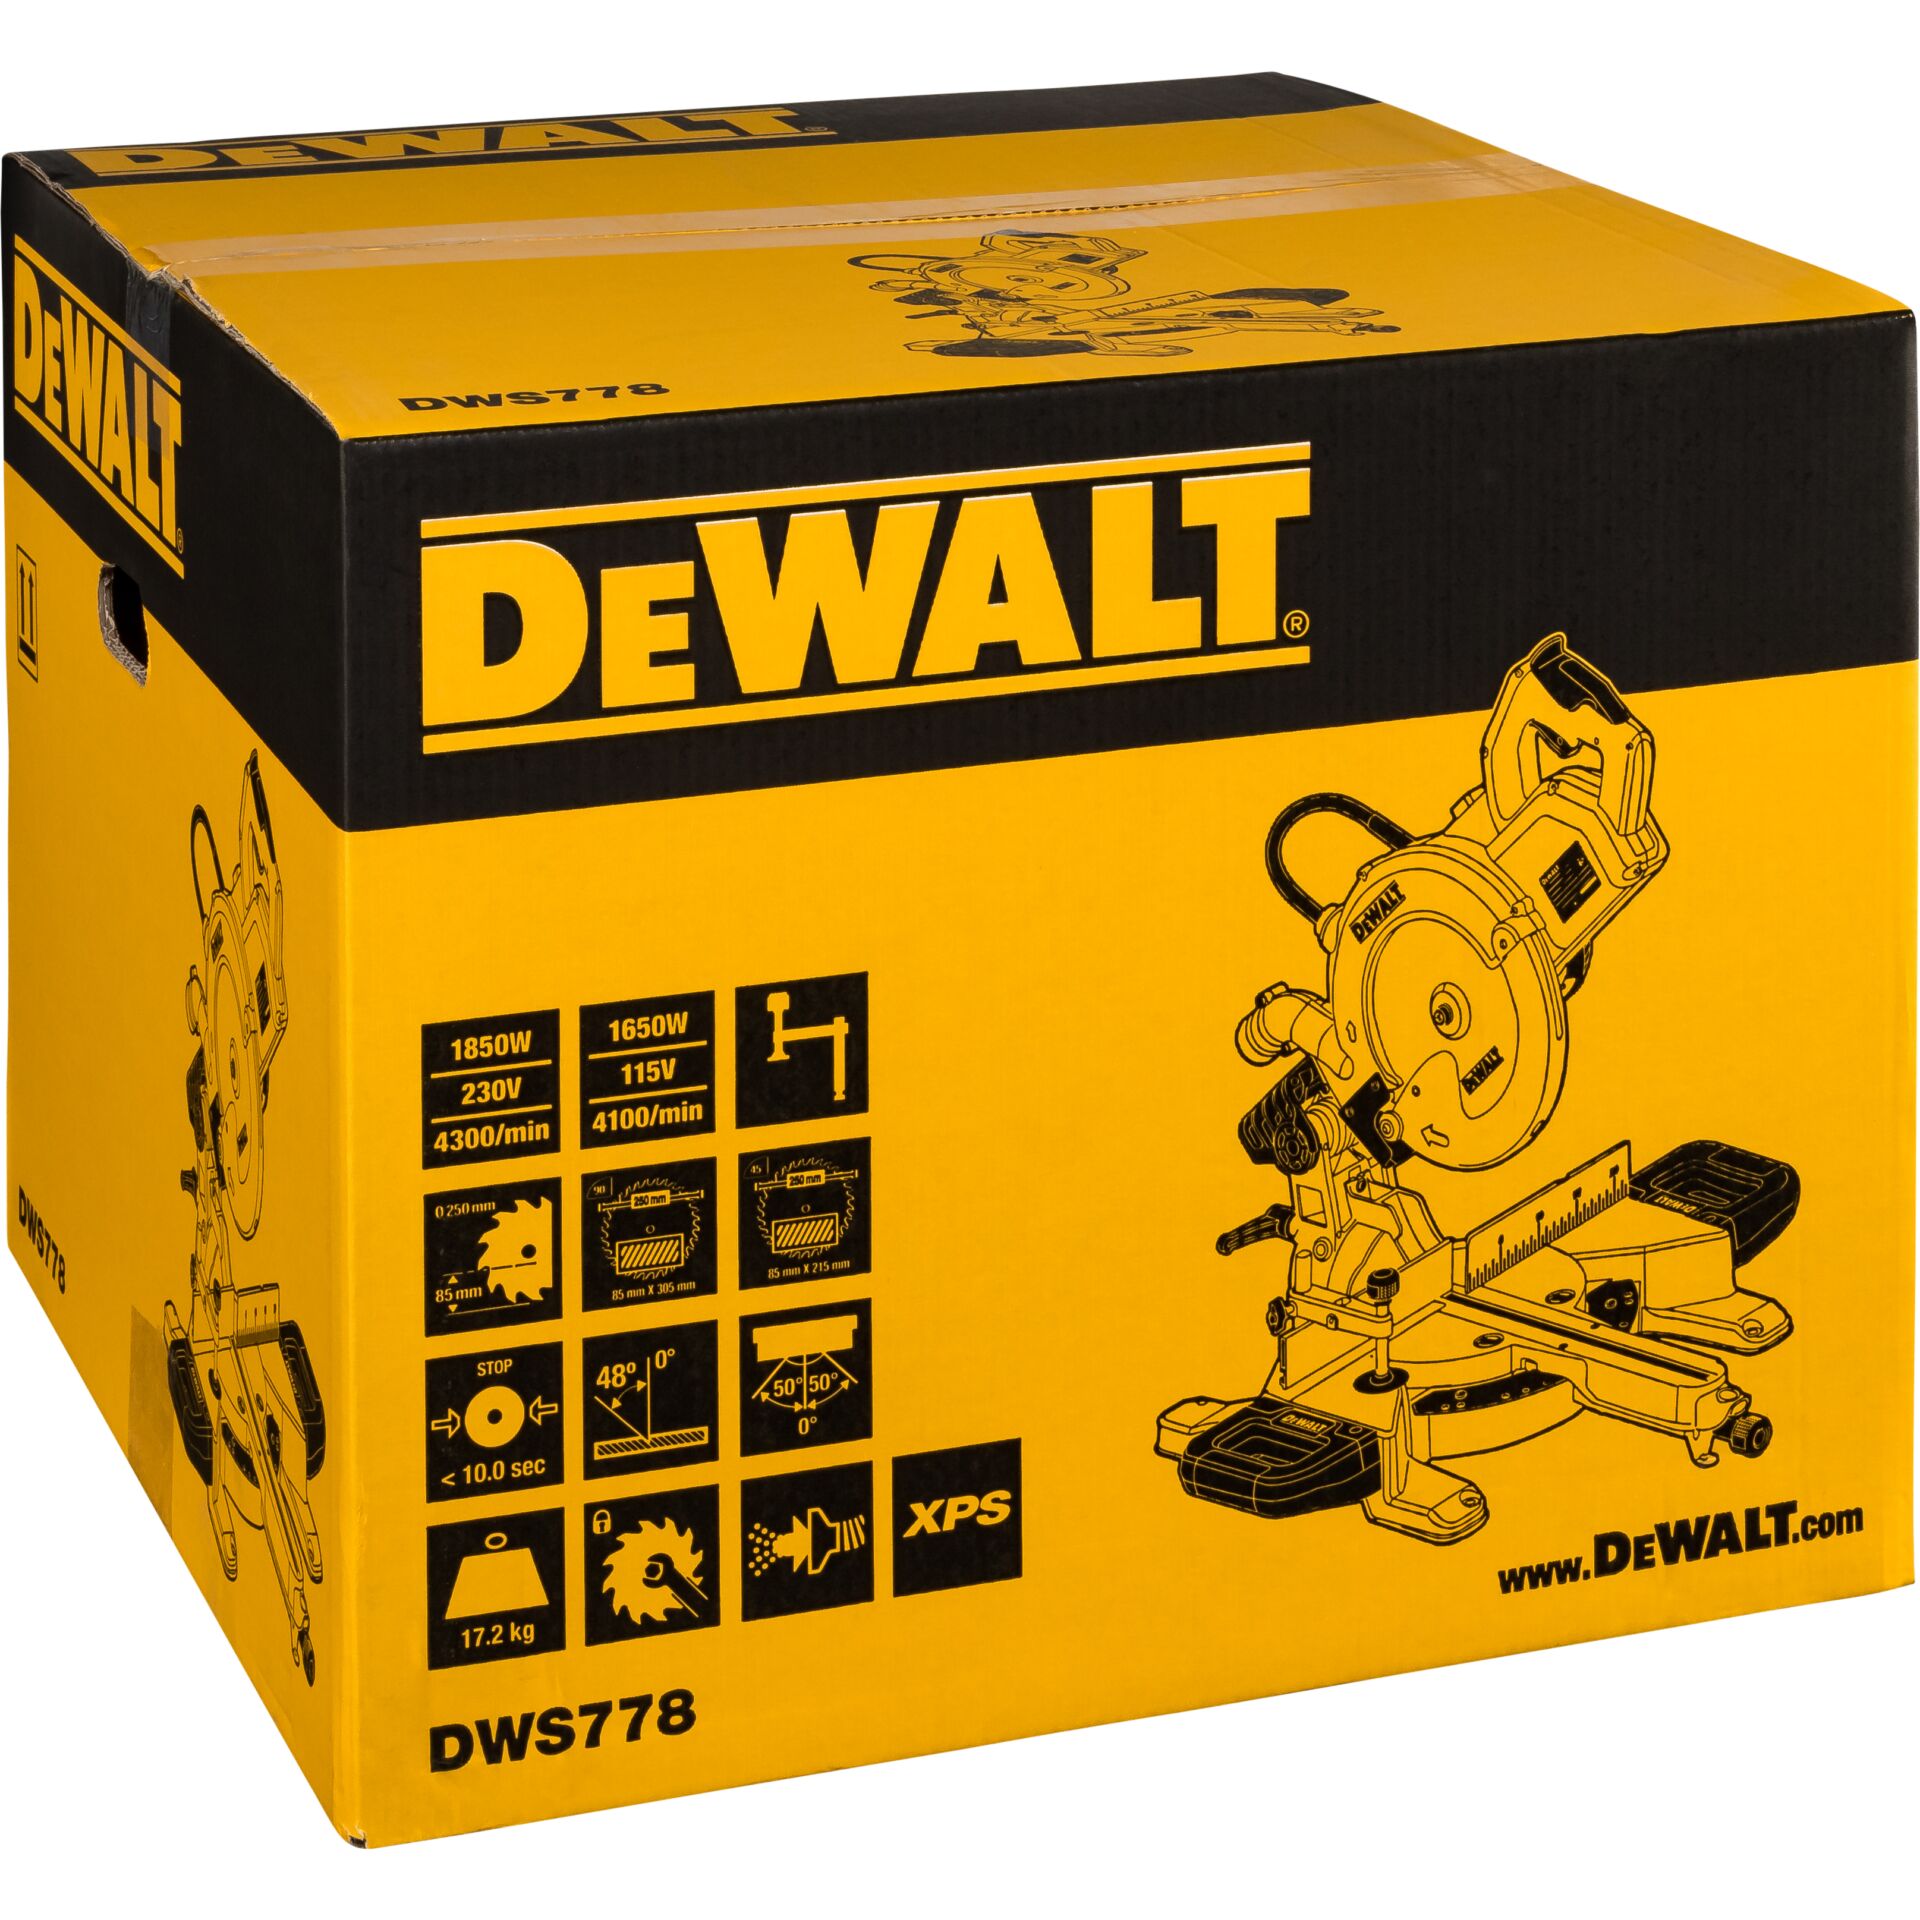 DeWalt DWS778-QS Paneelsäge 250 mm 1850 Watt